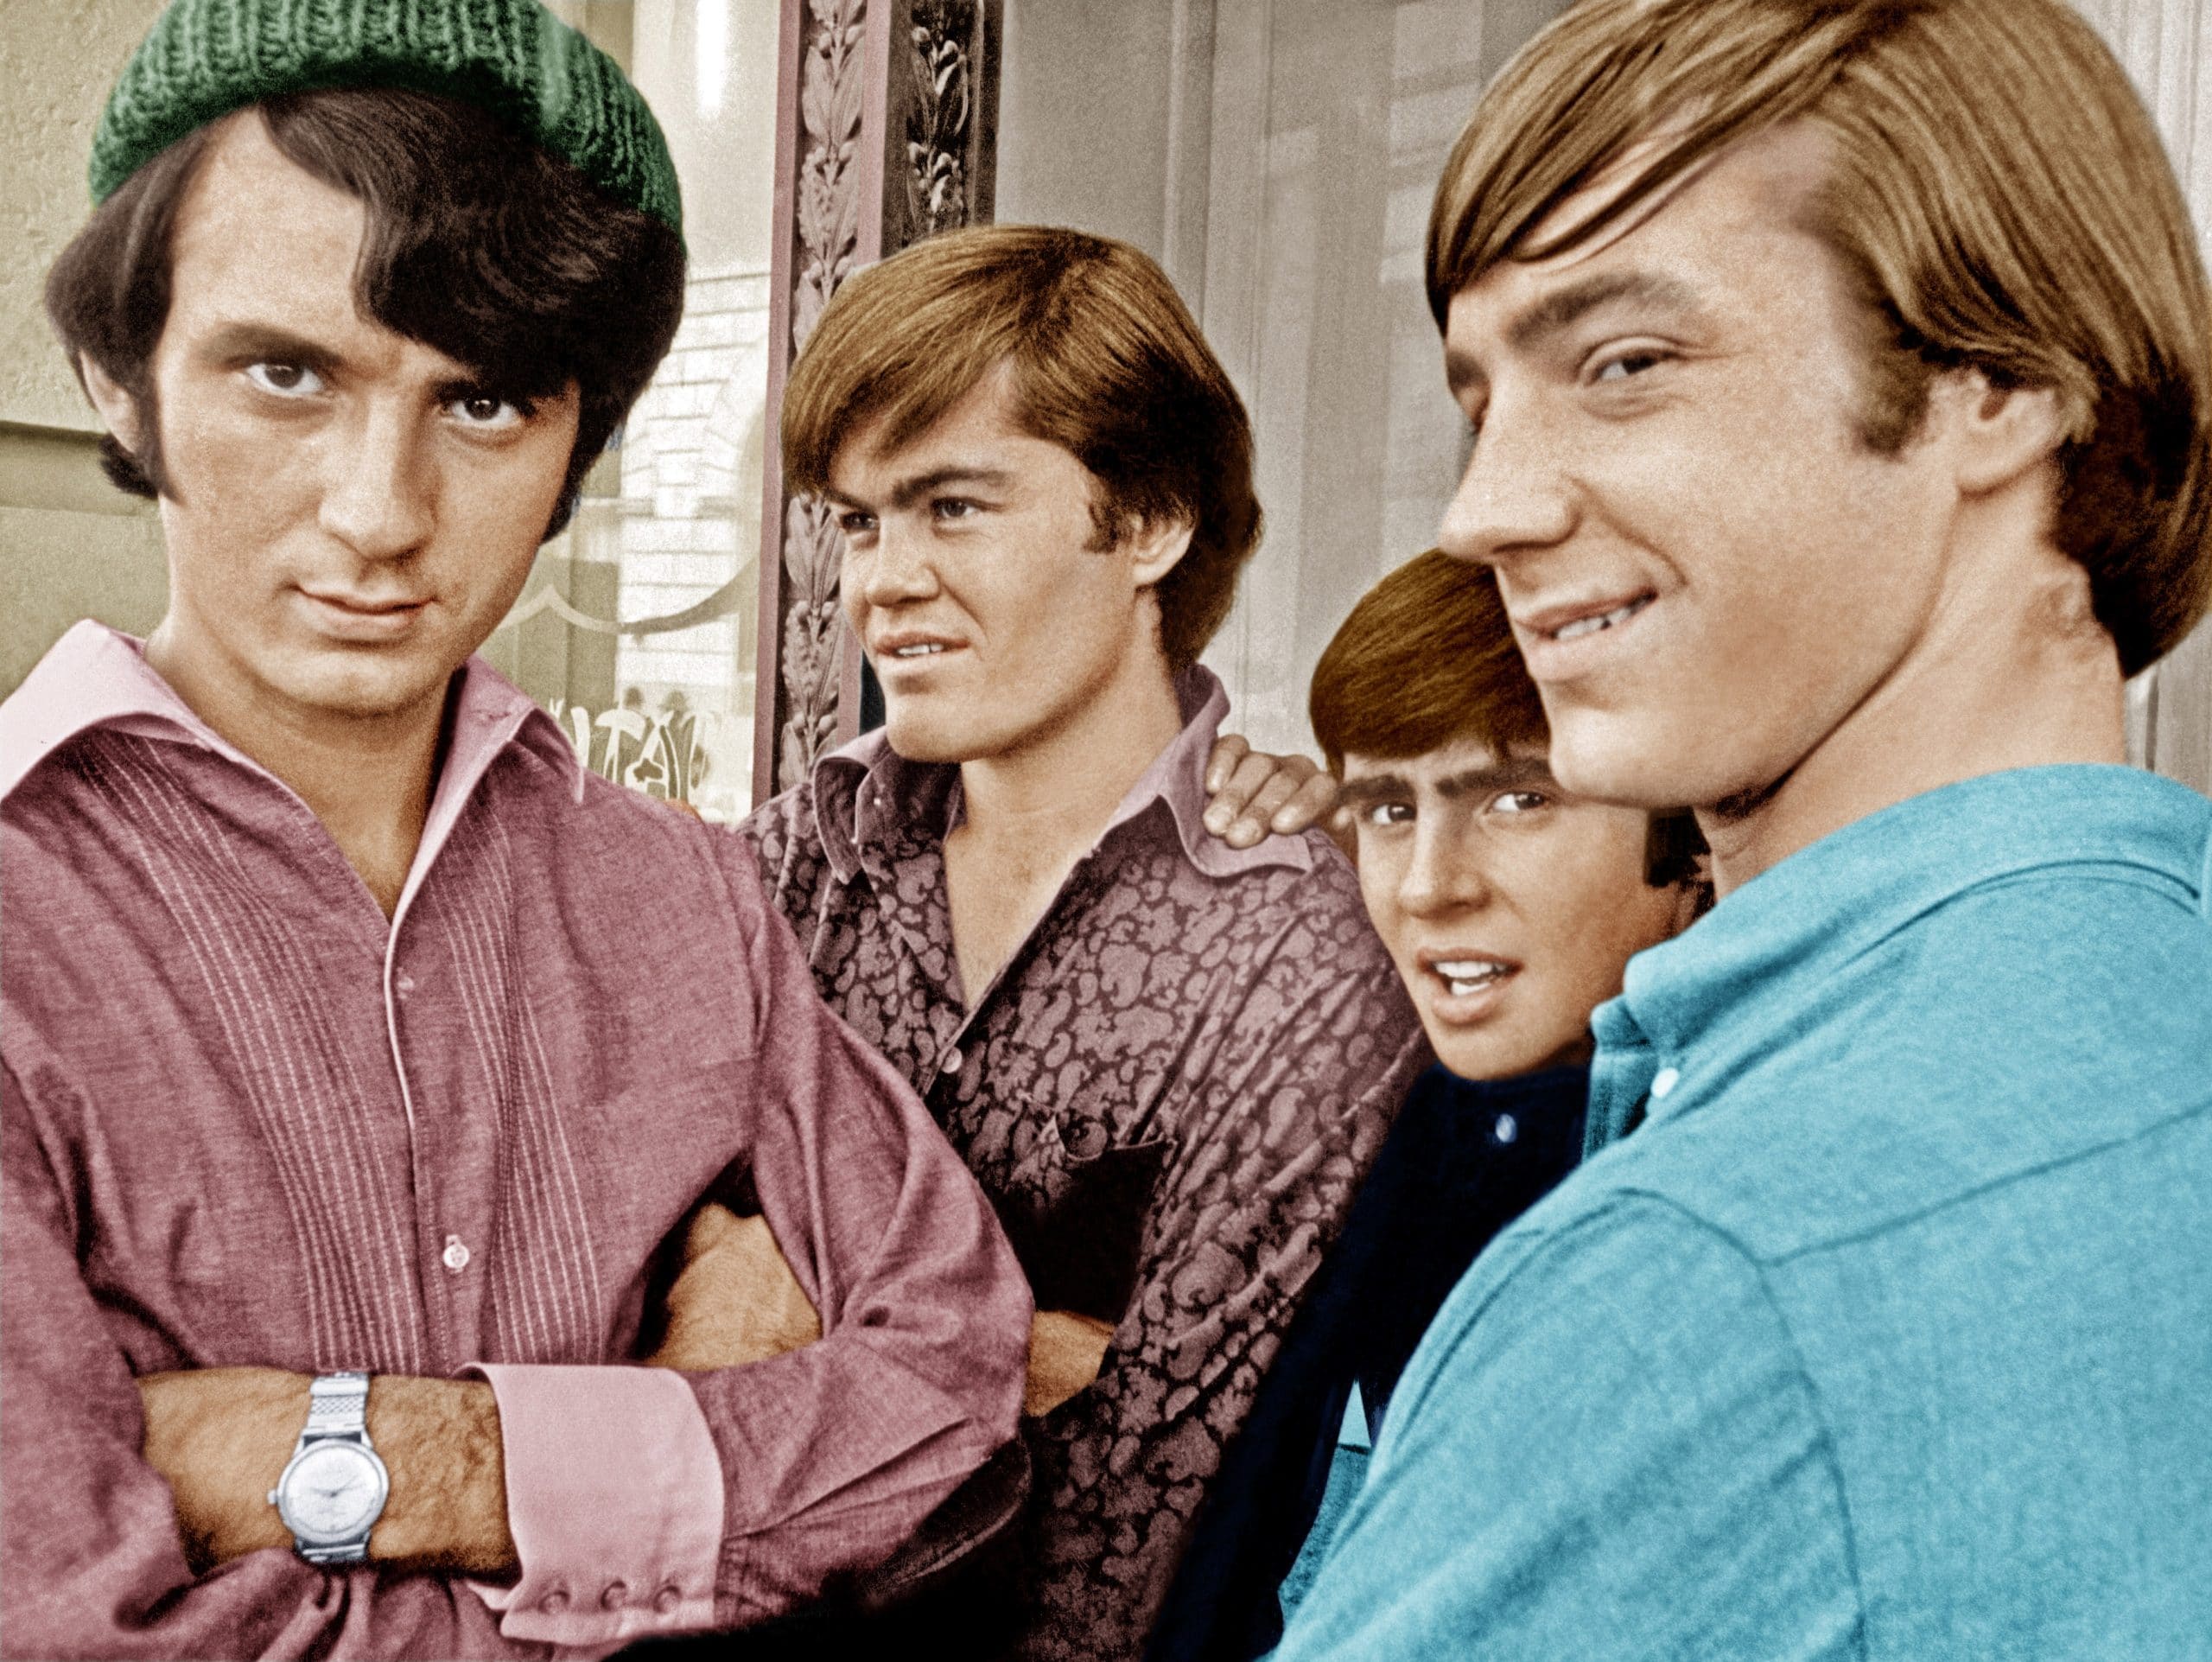 THE MONKEES, (from left): Mike Nesmith, Micky Dolenz, Davy Jones, Peter Tork, 1966-68 